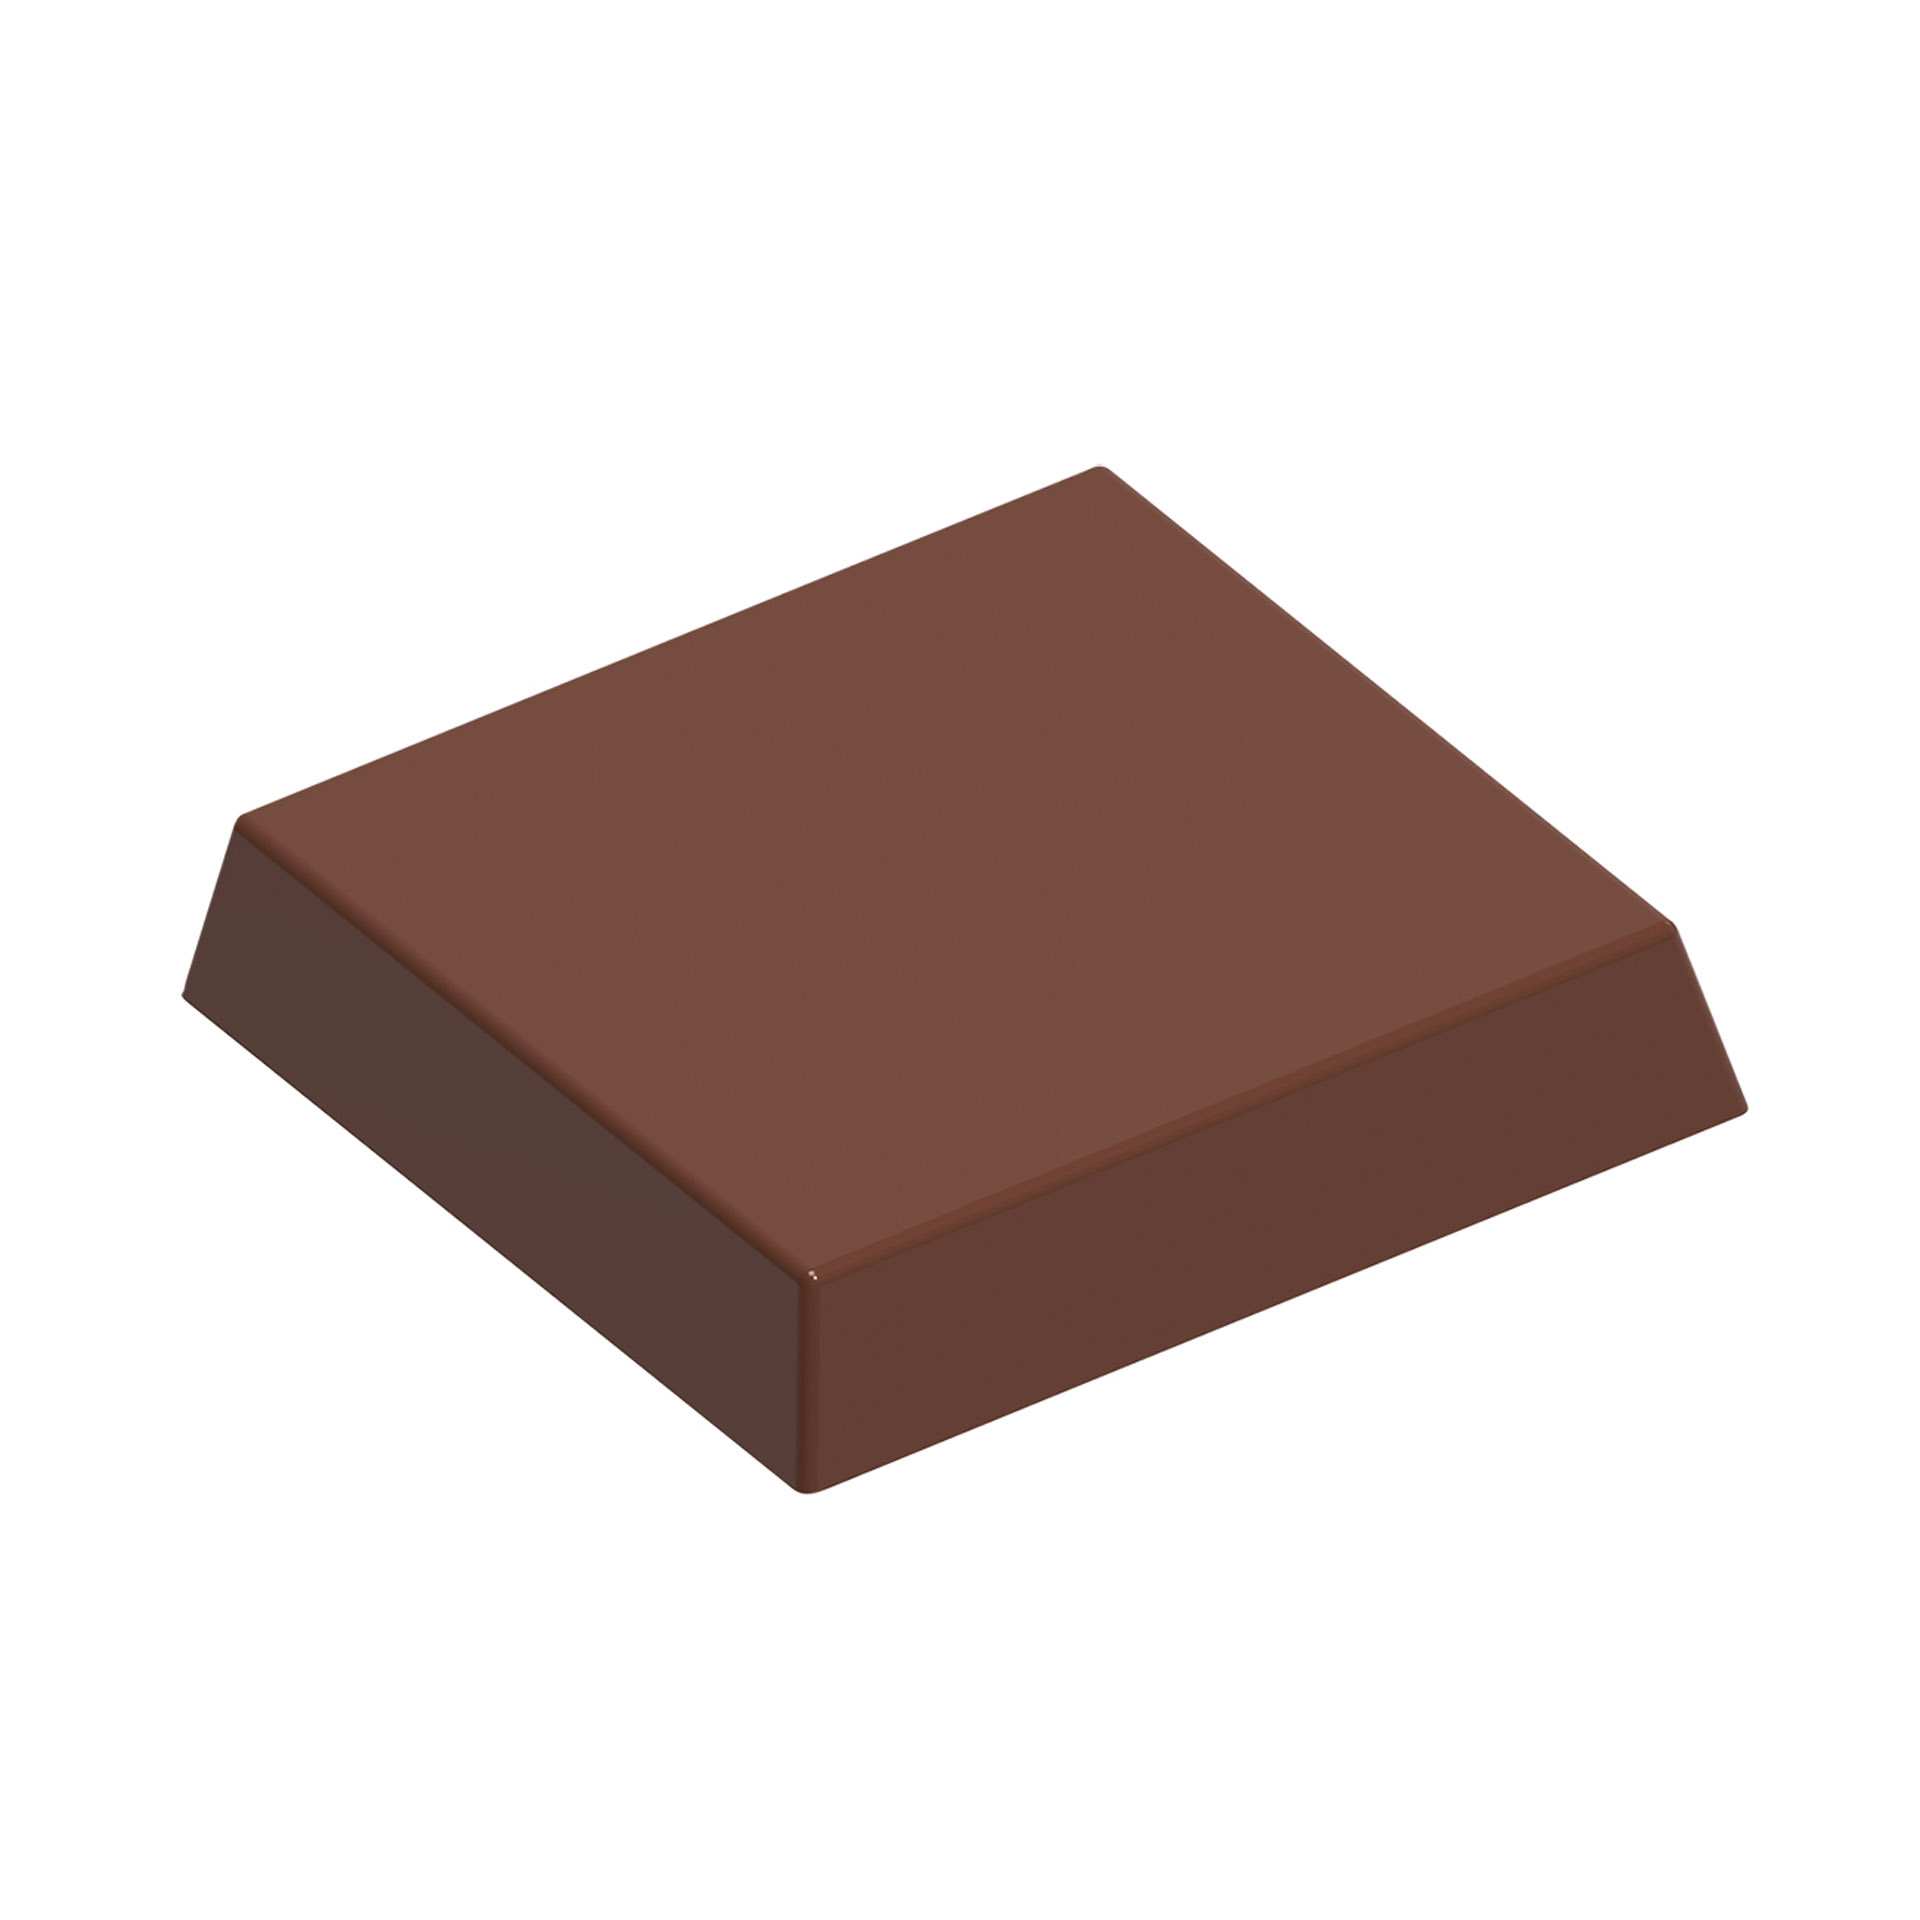 Schokoladen-Form - Keks Weltraum-Alphabet - Abm. 27,5 x 13,5 x 2,4 cm - Polycarbonat - 421887-C